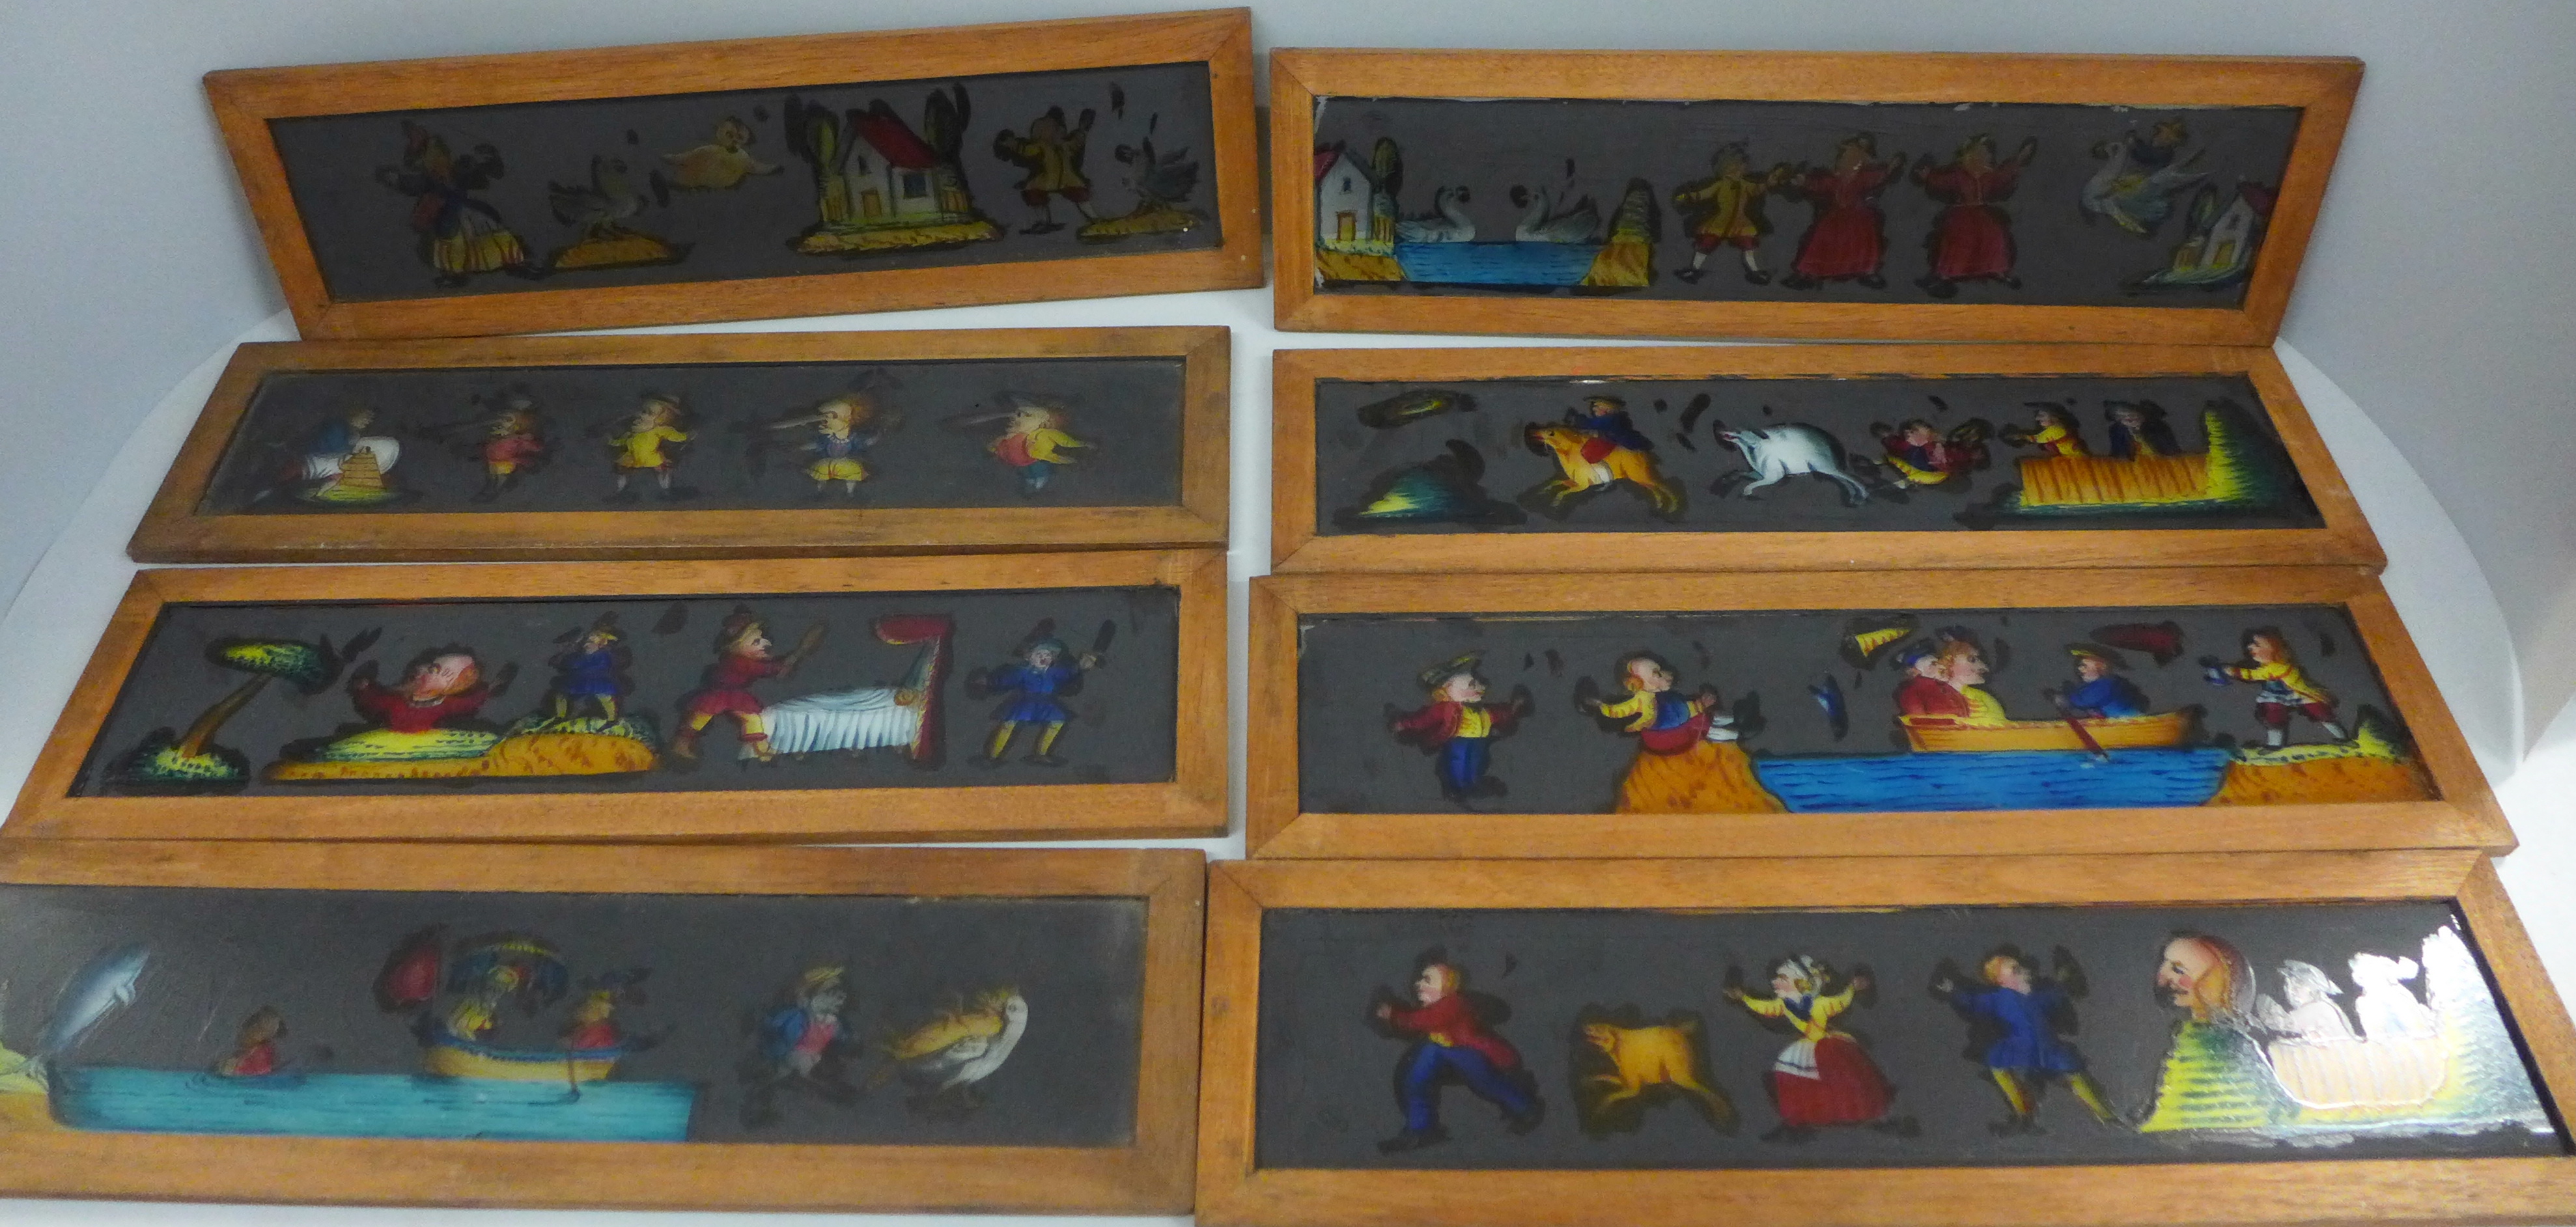 A box of lantern slides, two depicting nursery rhymes